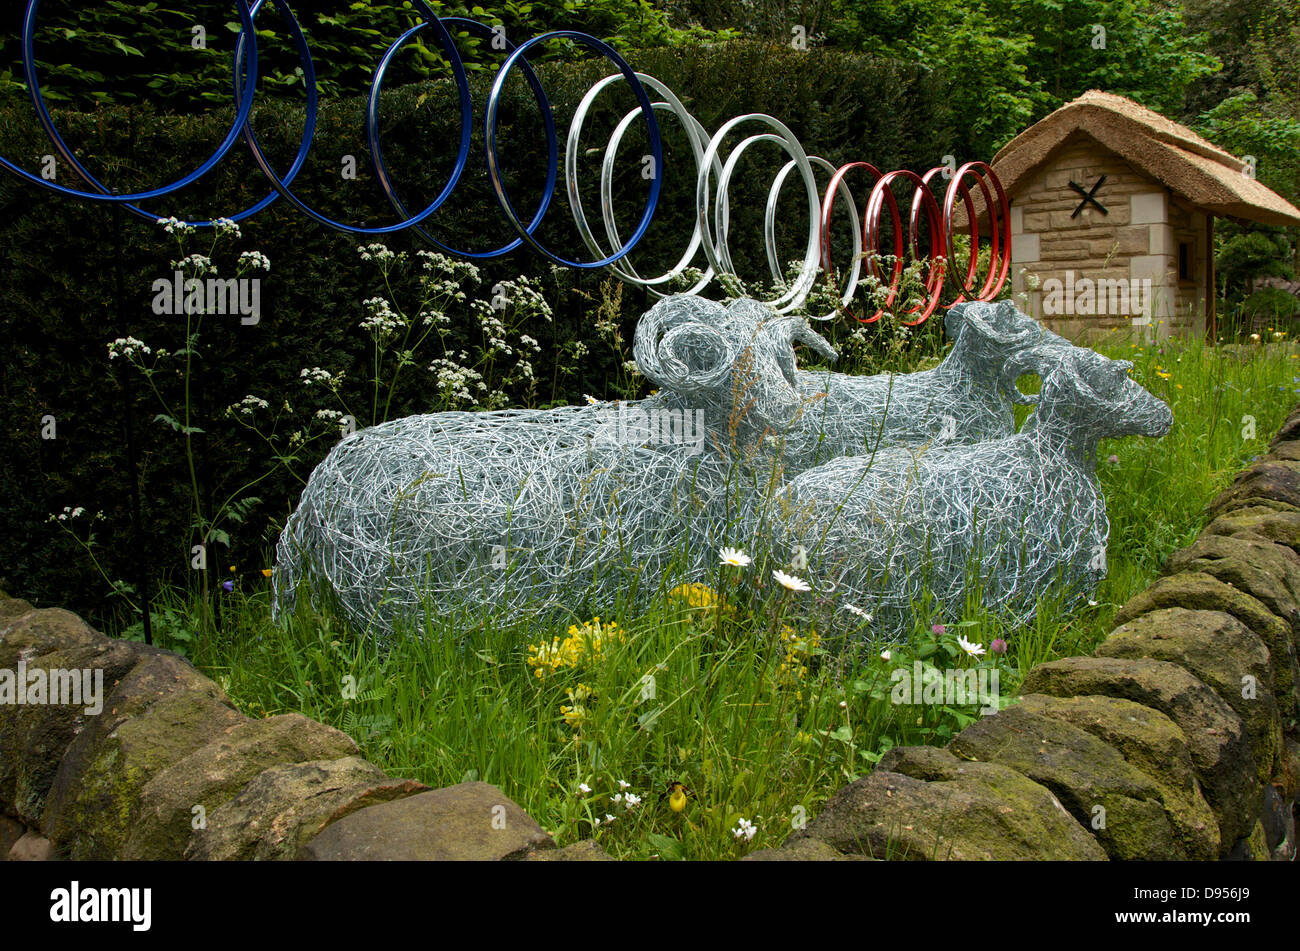 Esculturas de ovejas en Bienvenido a Yorkshire Jardín artesanal Le Jardin de Yorkshire en RHS Chelsea Flower Show 2013. Foto de stock